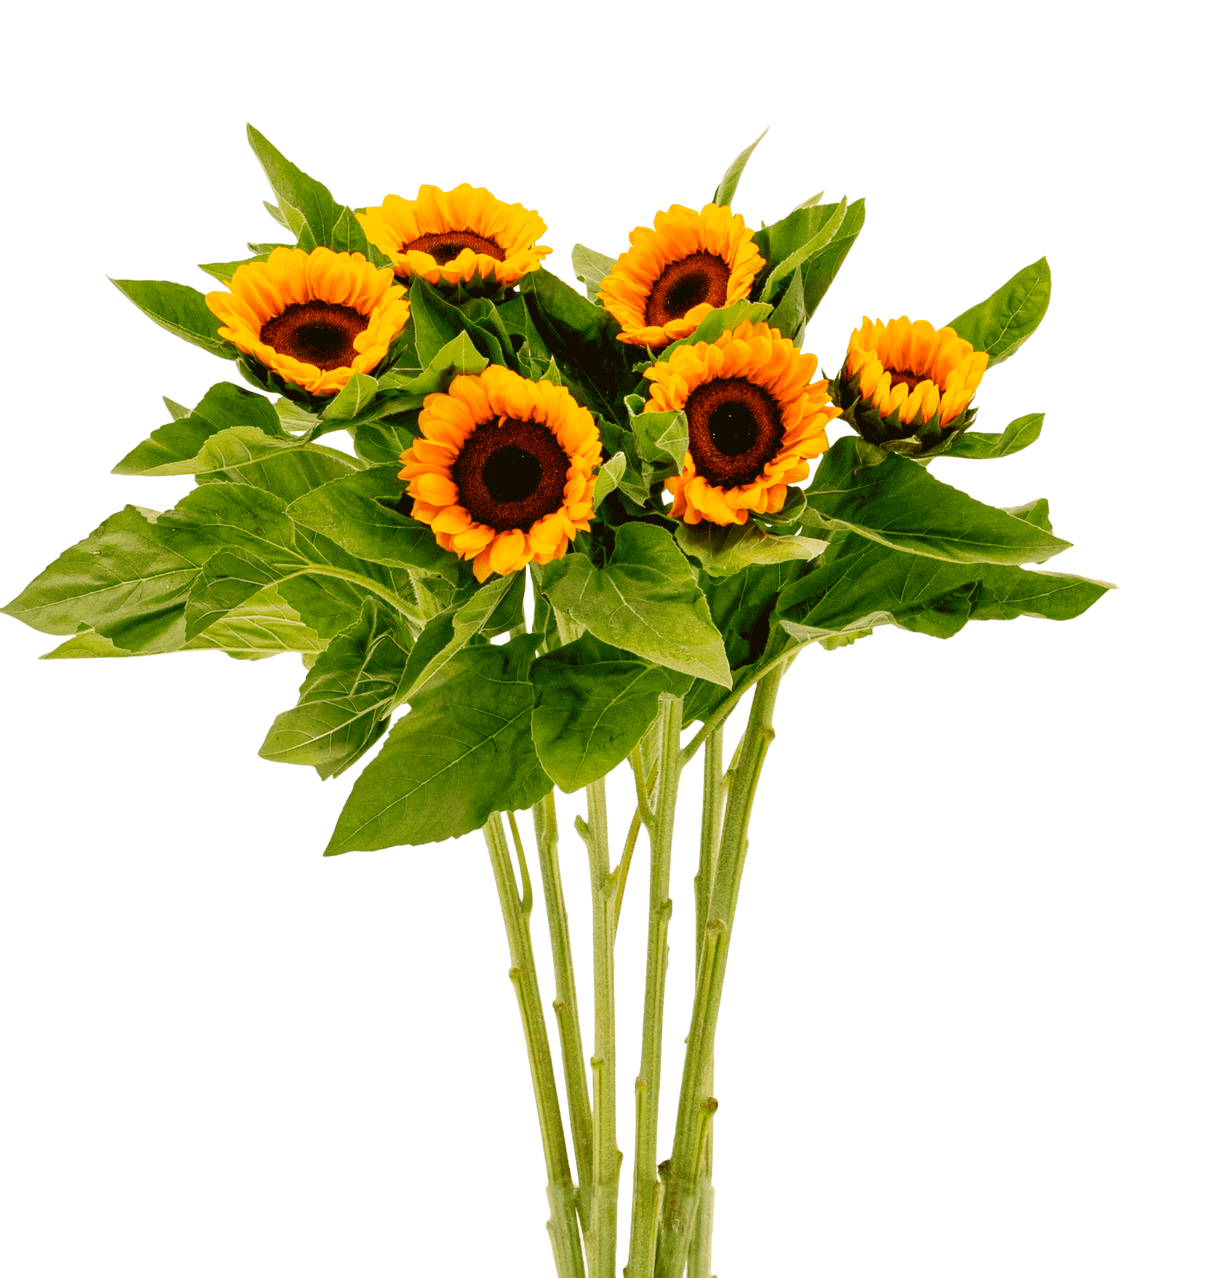 Sunflower (Malaysia)